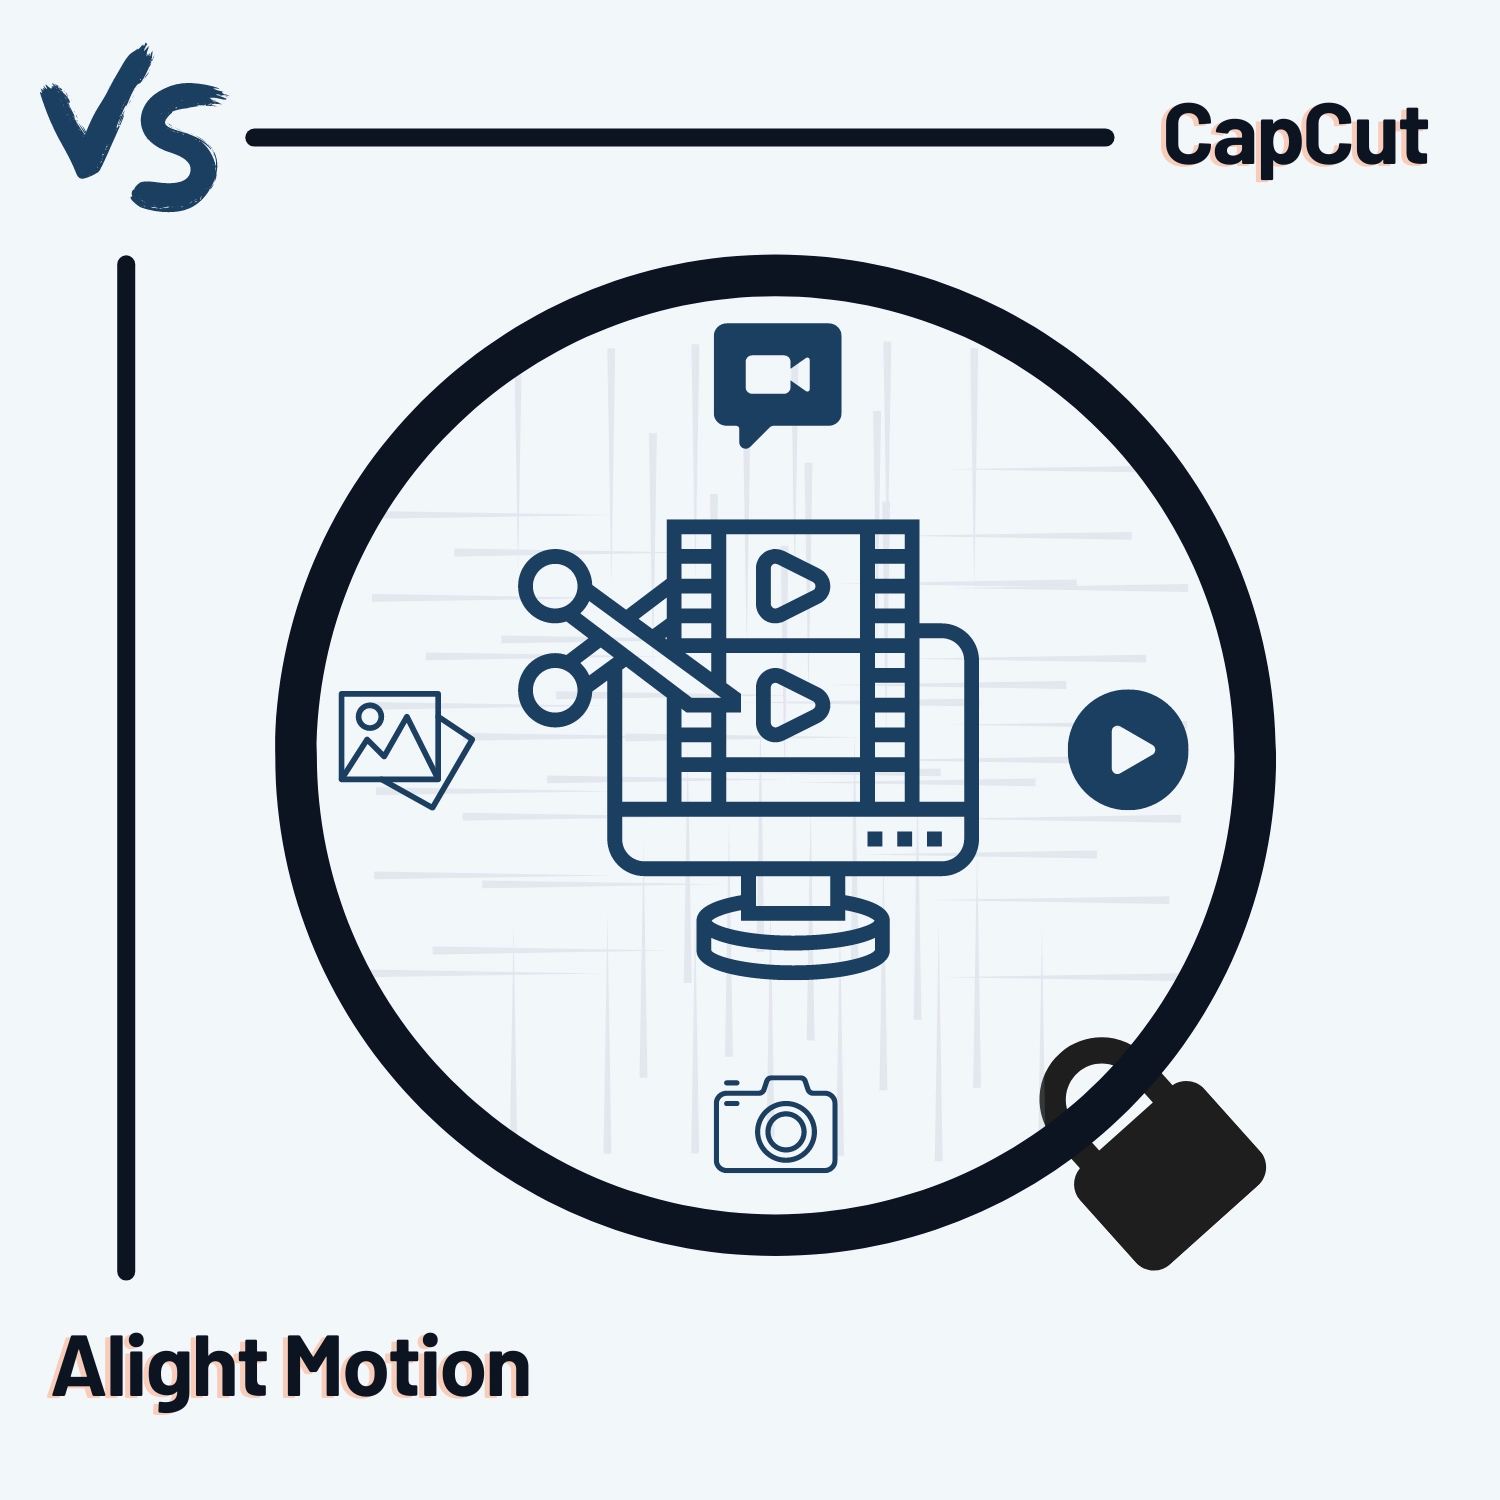 CapCut vs. Alight Motion